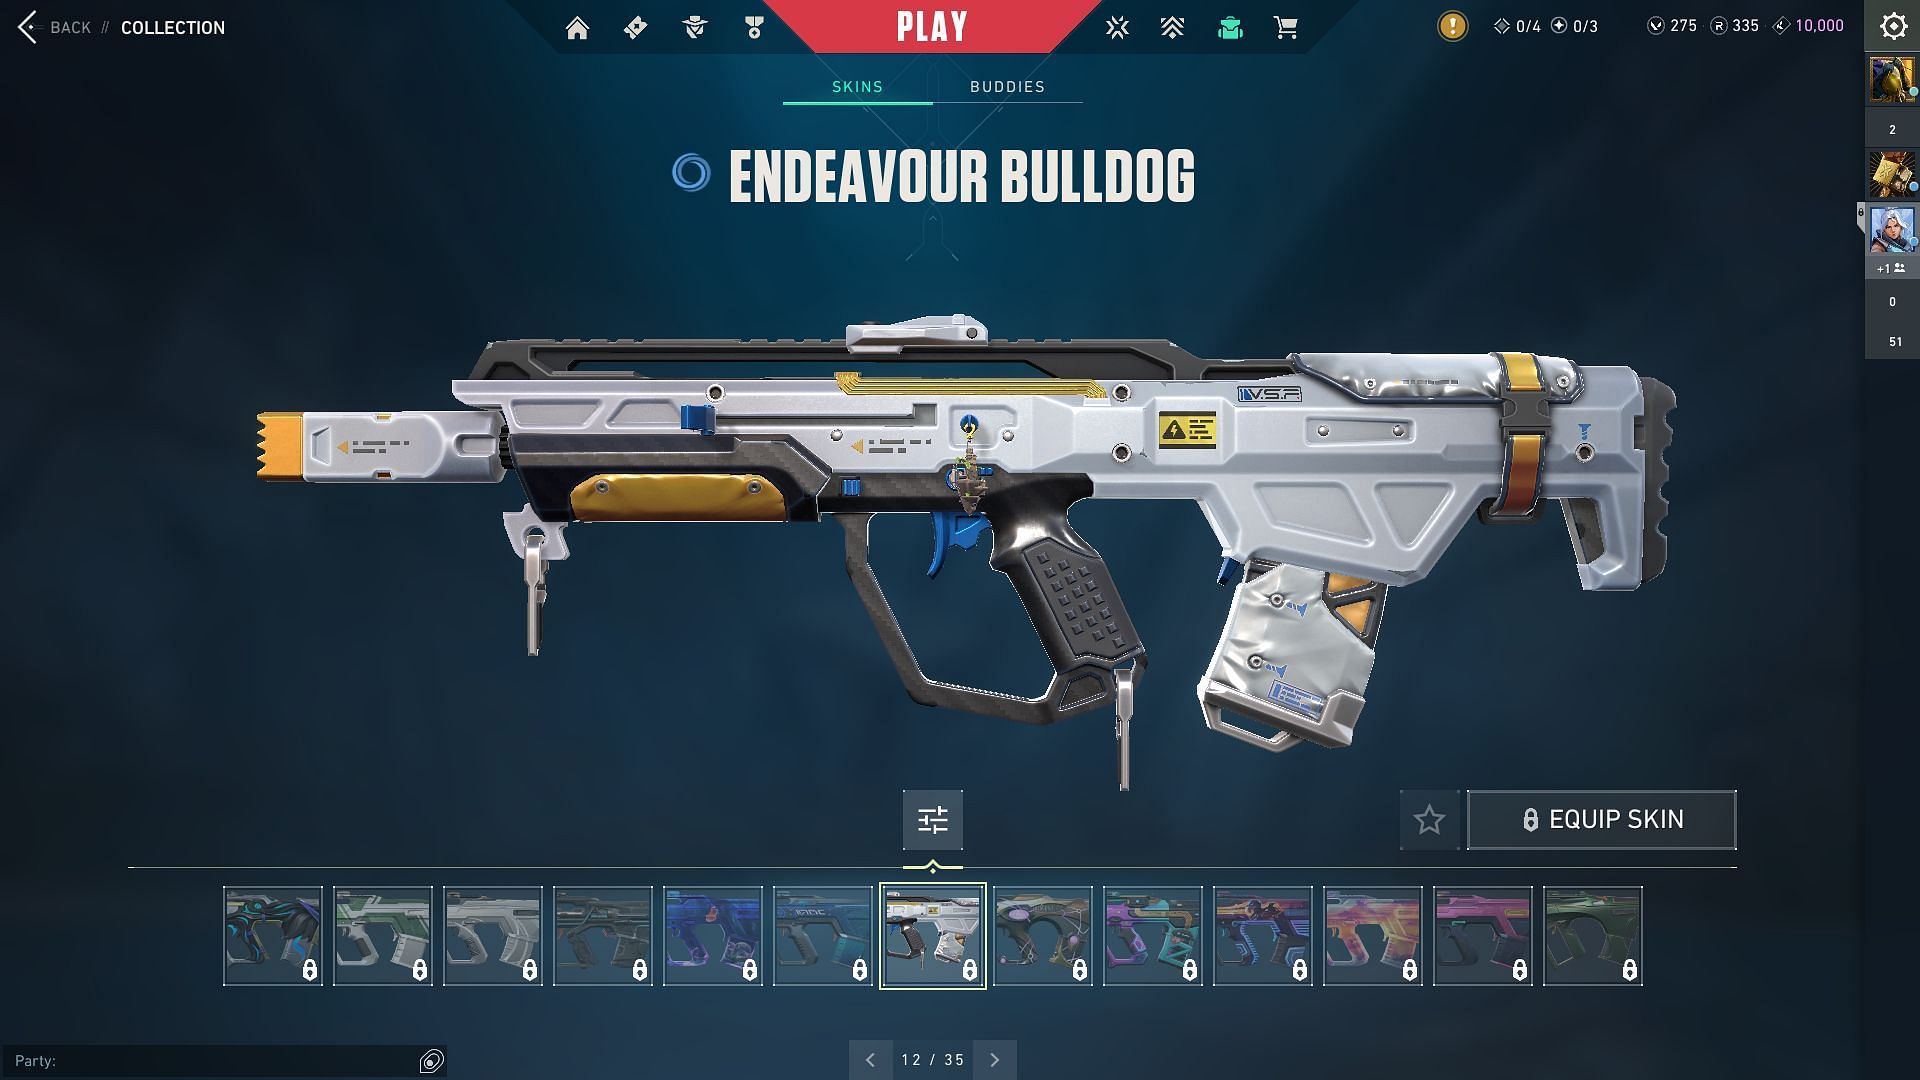 Endeavour Bulldog (Image via Sportskeeda and Riot Games)